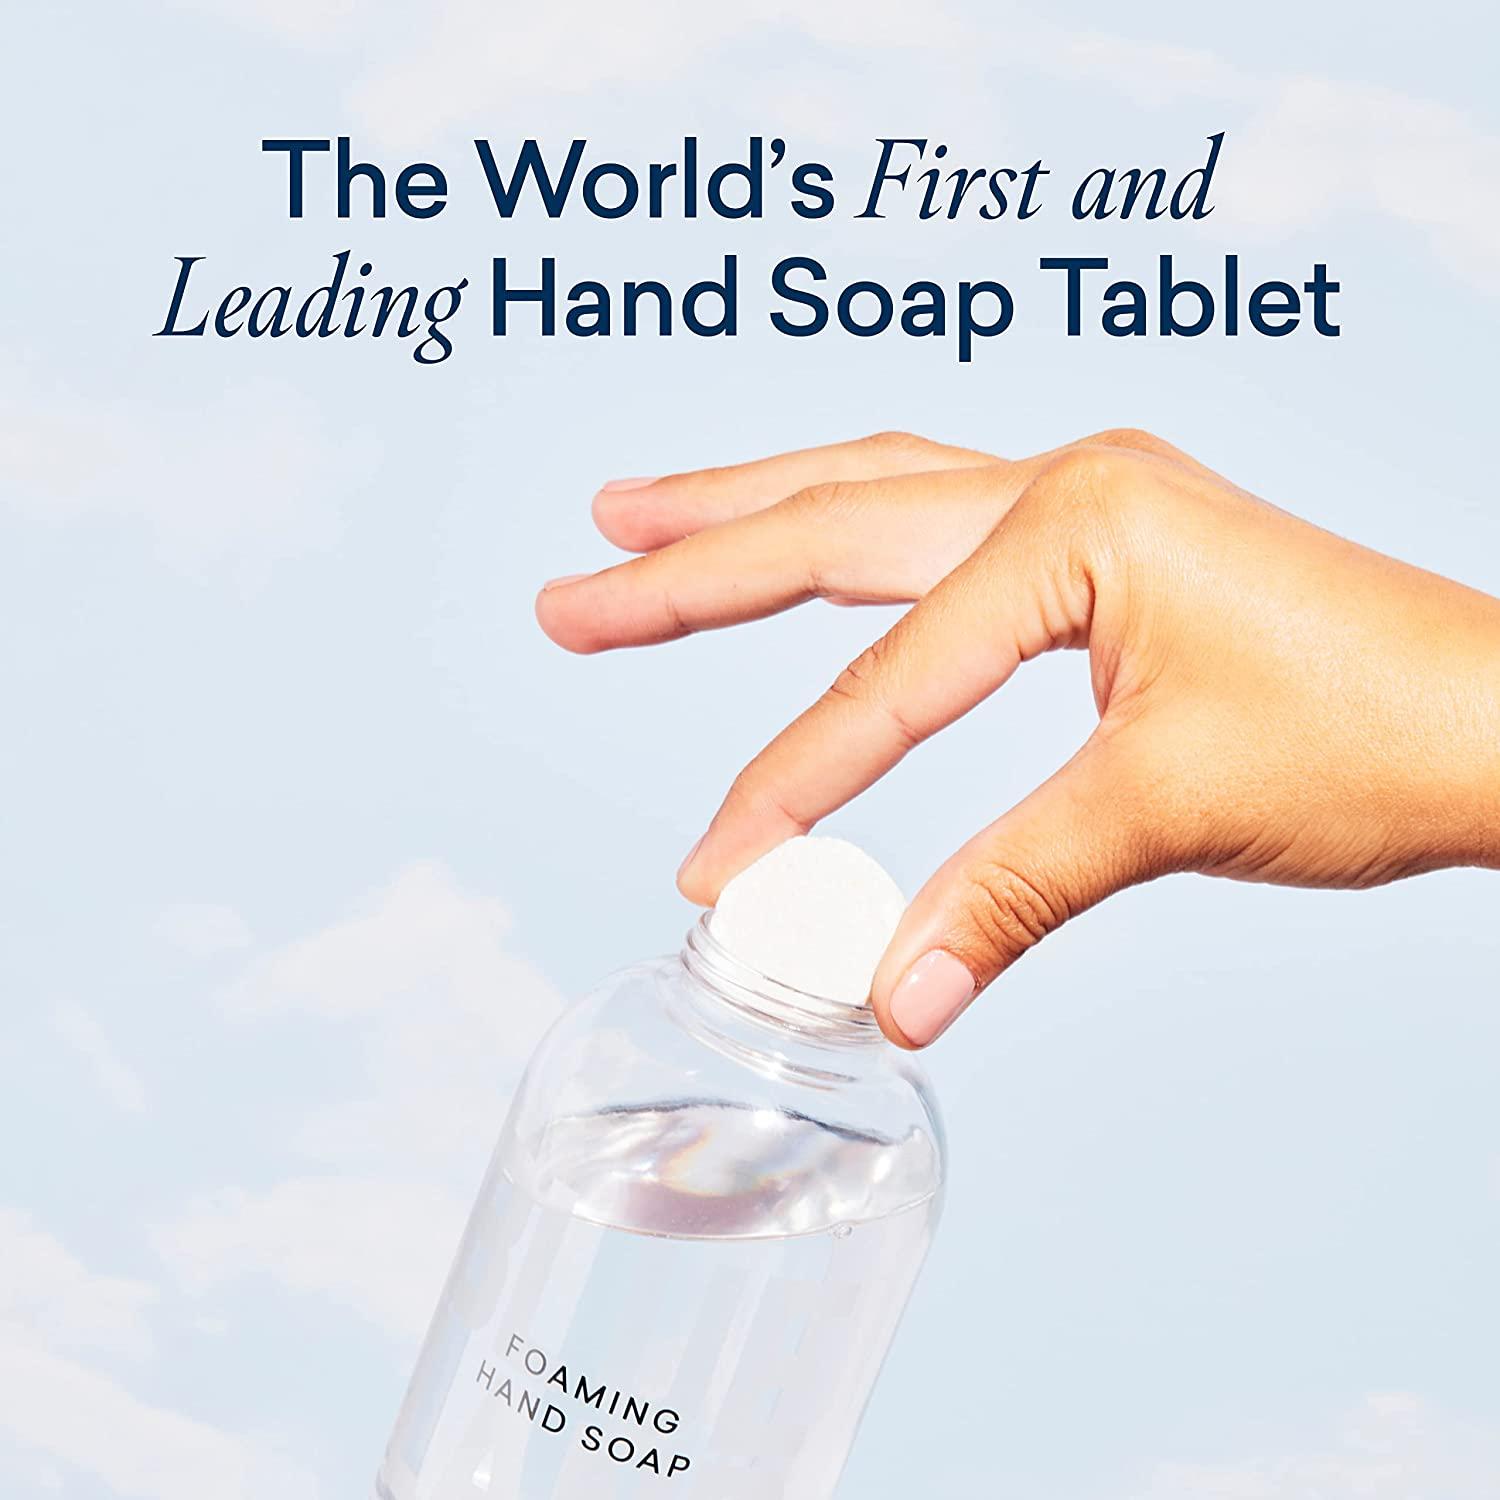 Blueland Foaming Hand Soap Tablet - 0.30 oz